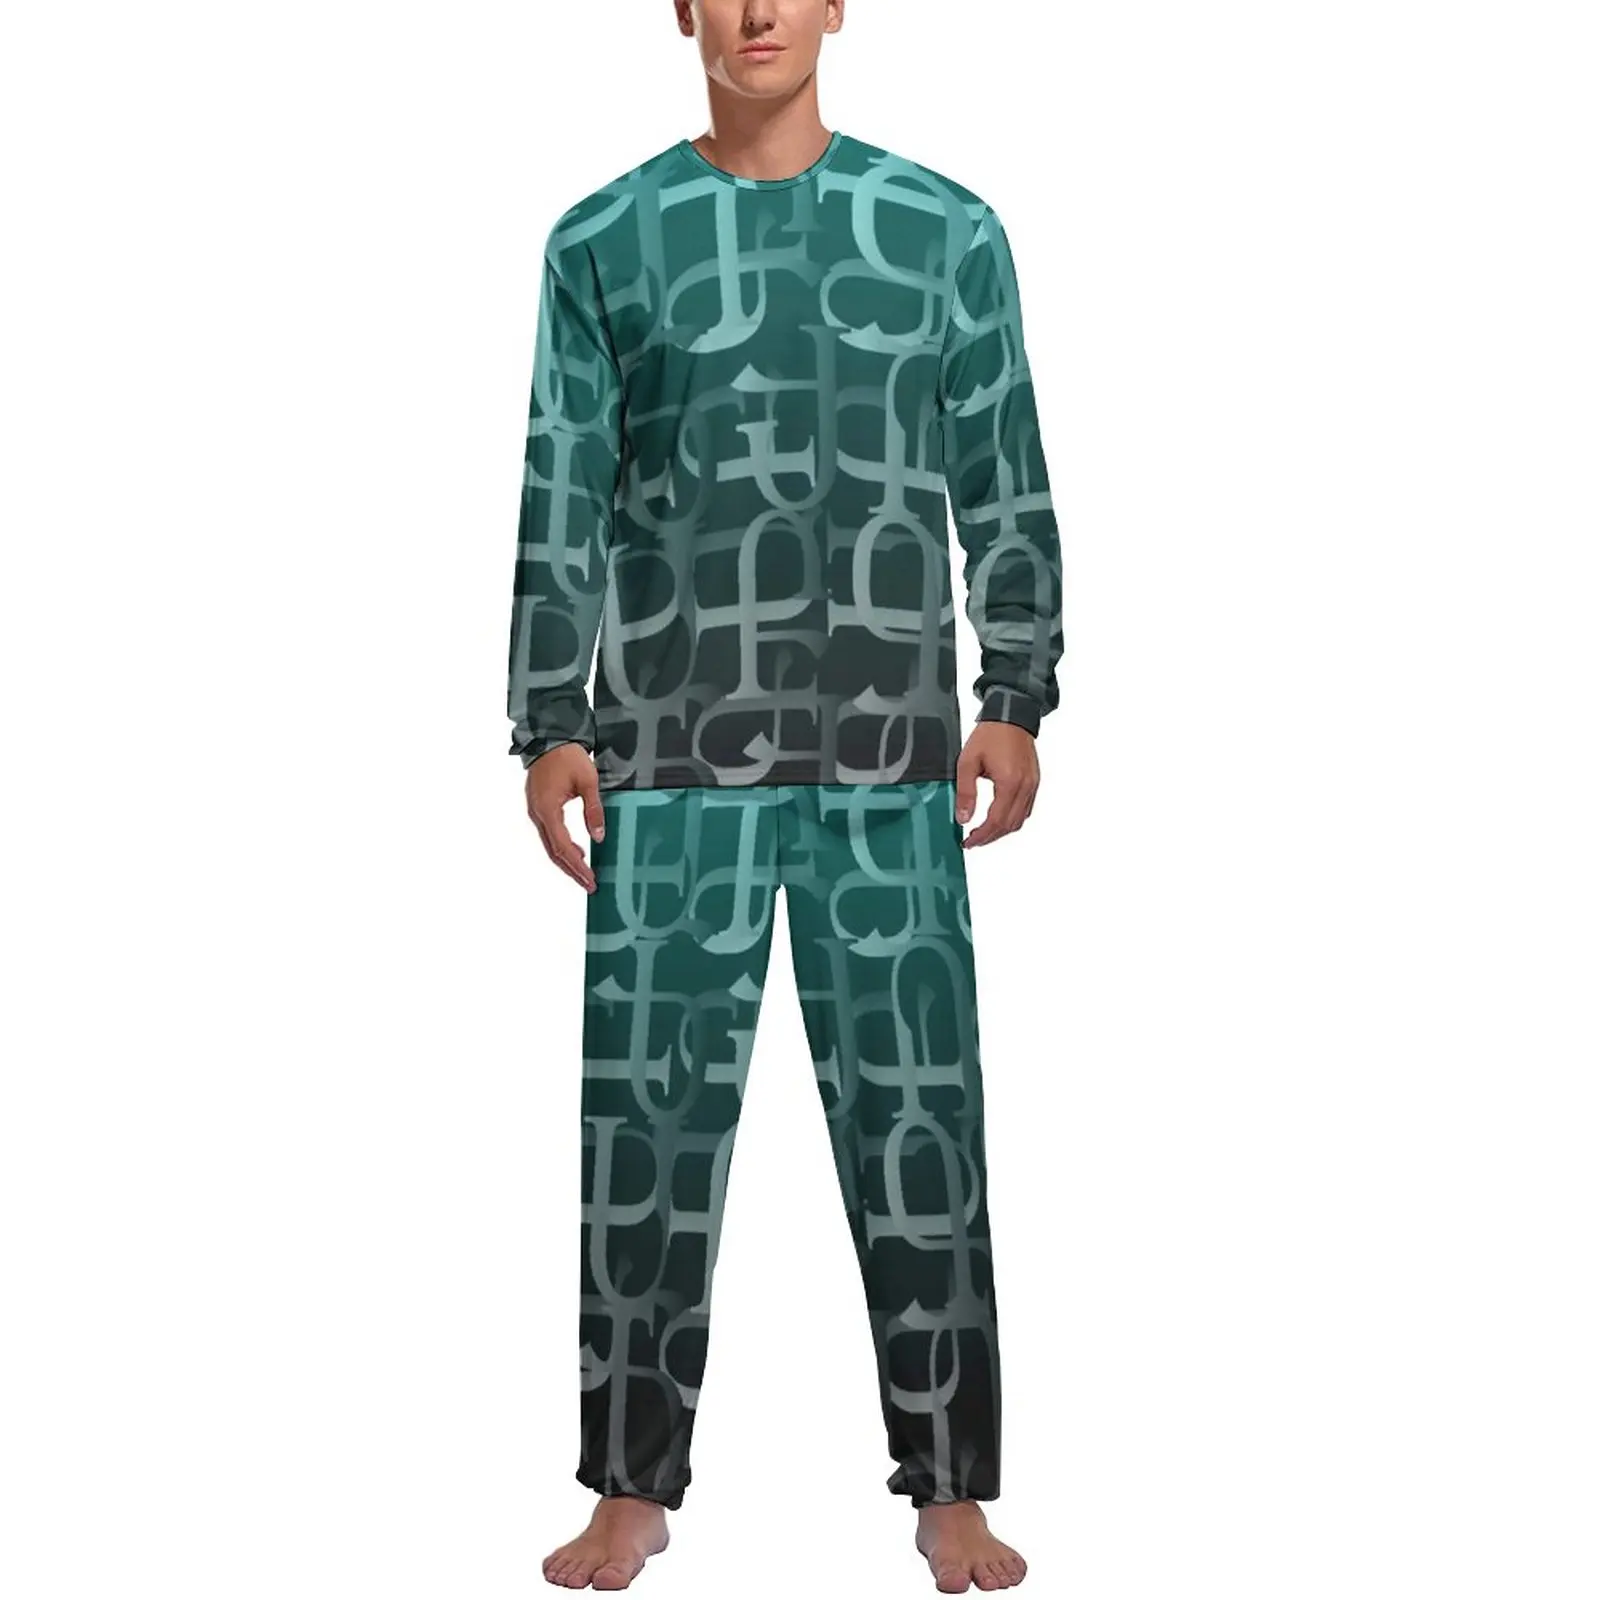 Abstract Letter Print Pajamas Fun Typography Men Long-Sleeve Kawaii Pajama Sets Two Piece Leisure Spring Graphic Sleepwear Gift